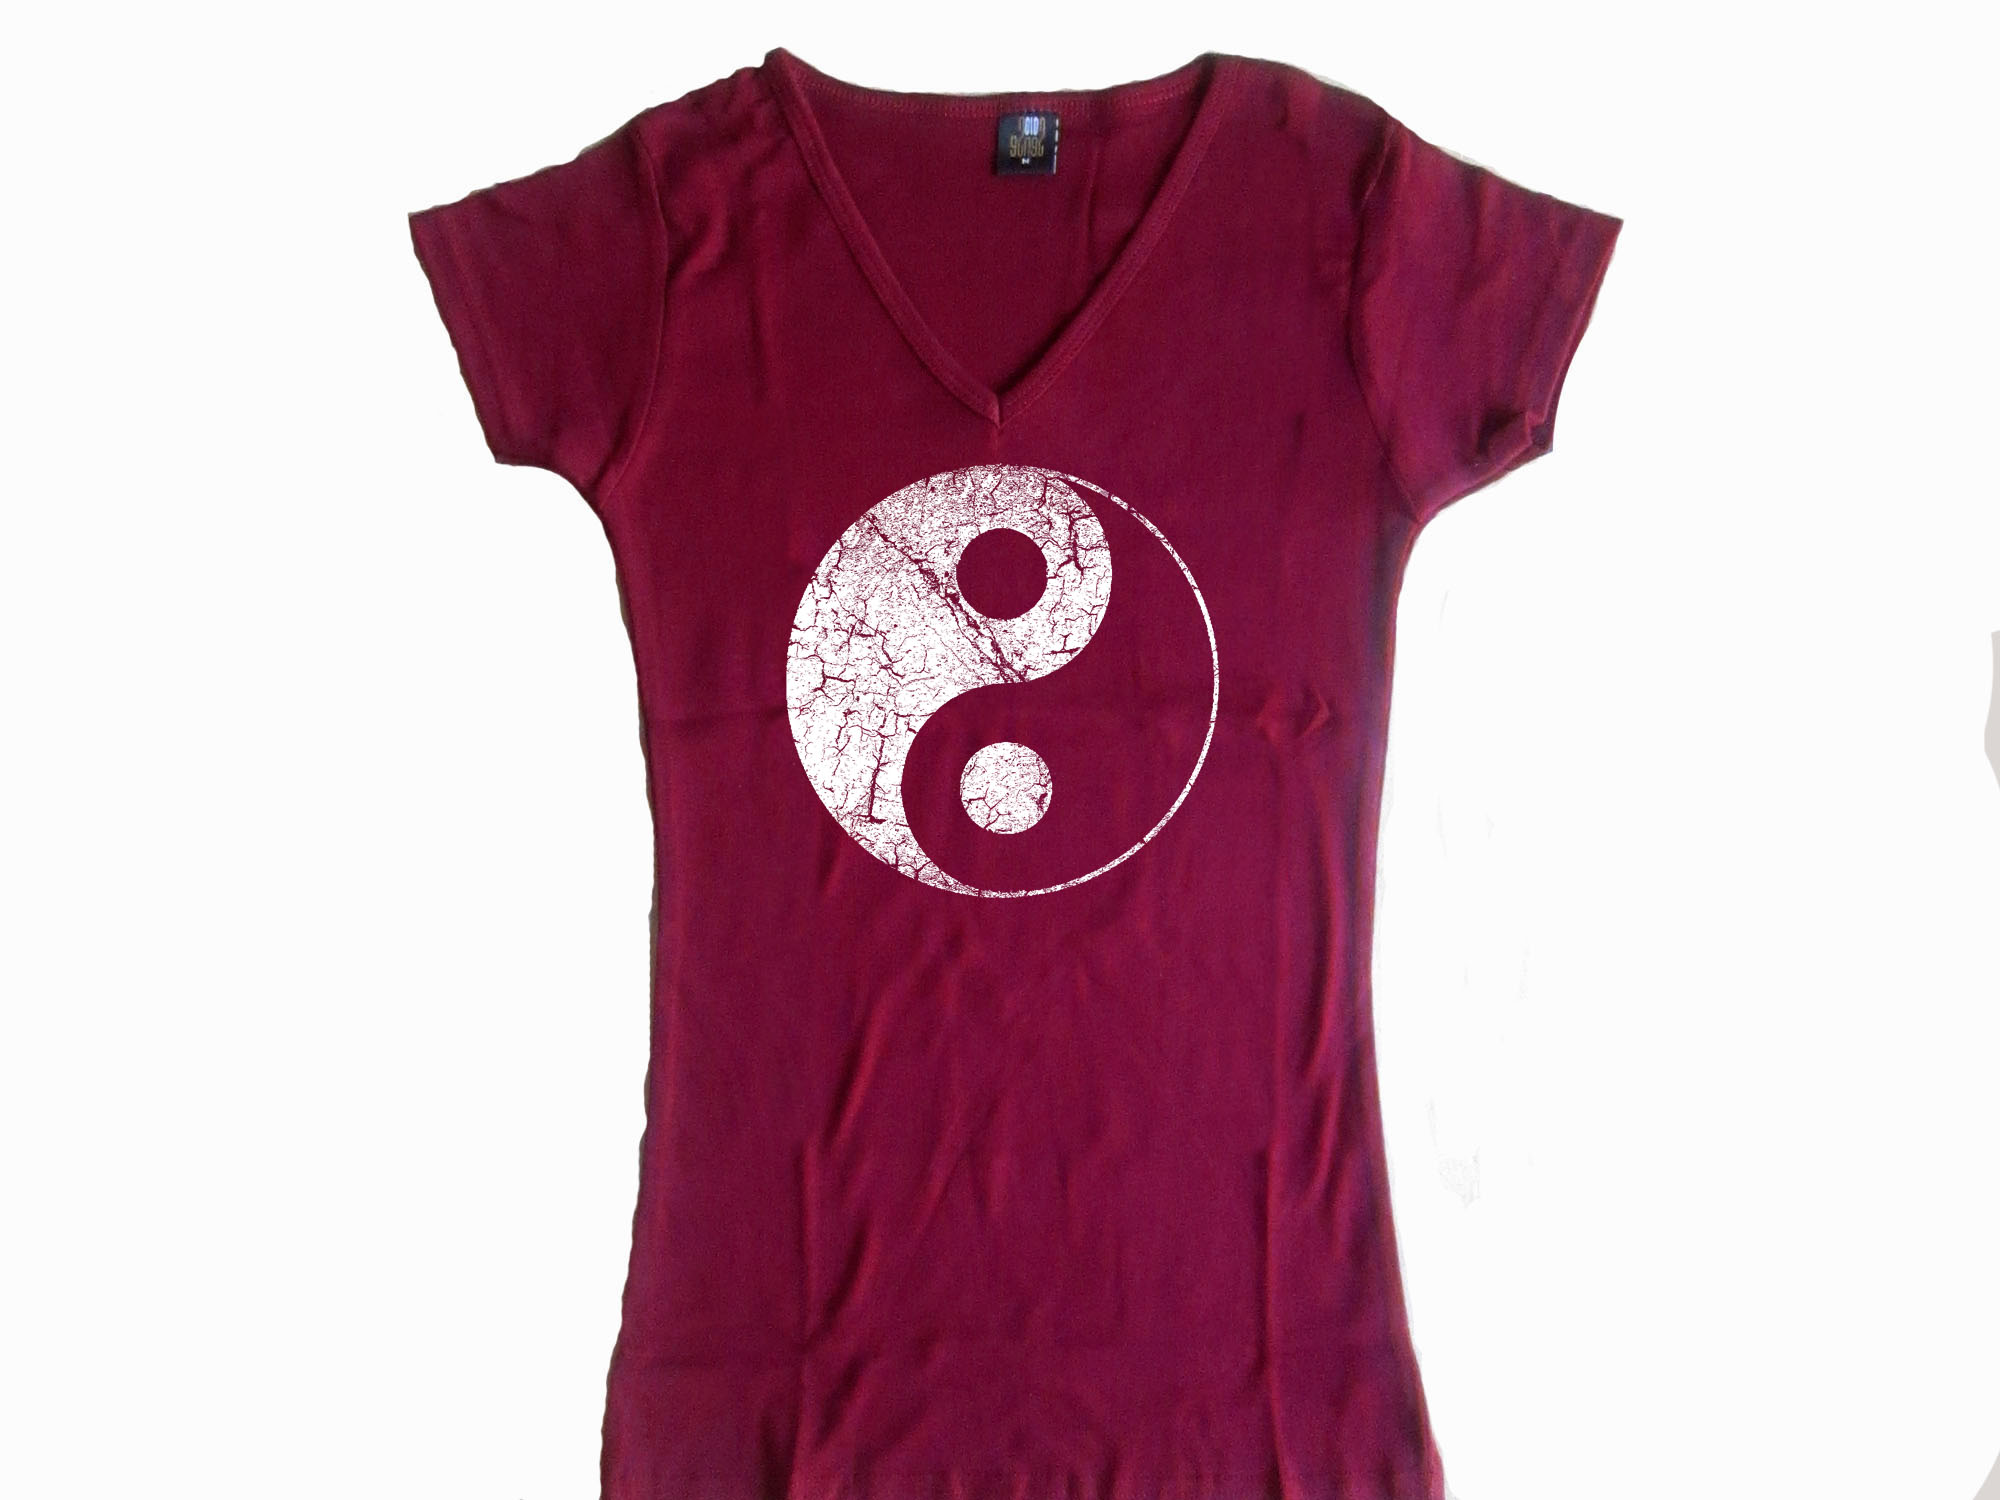 Yin yang distressed print bordo tee shirt